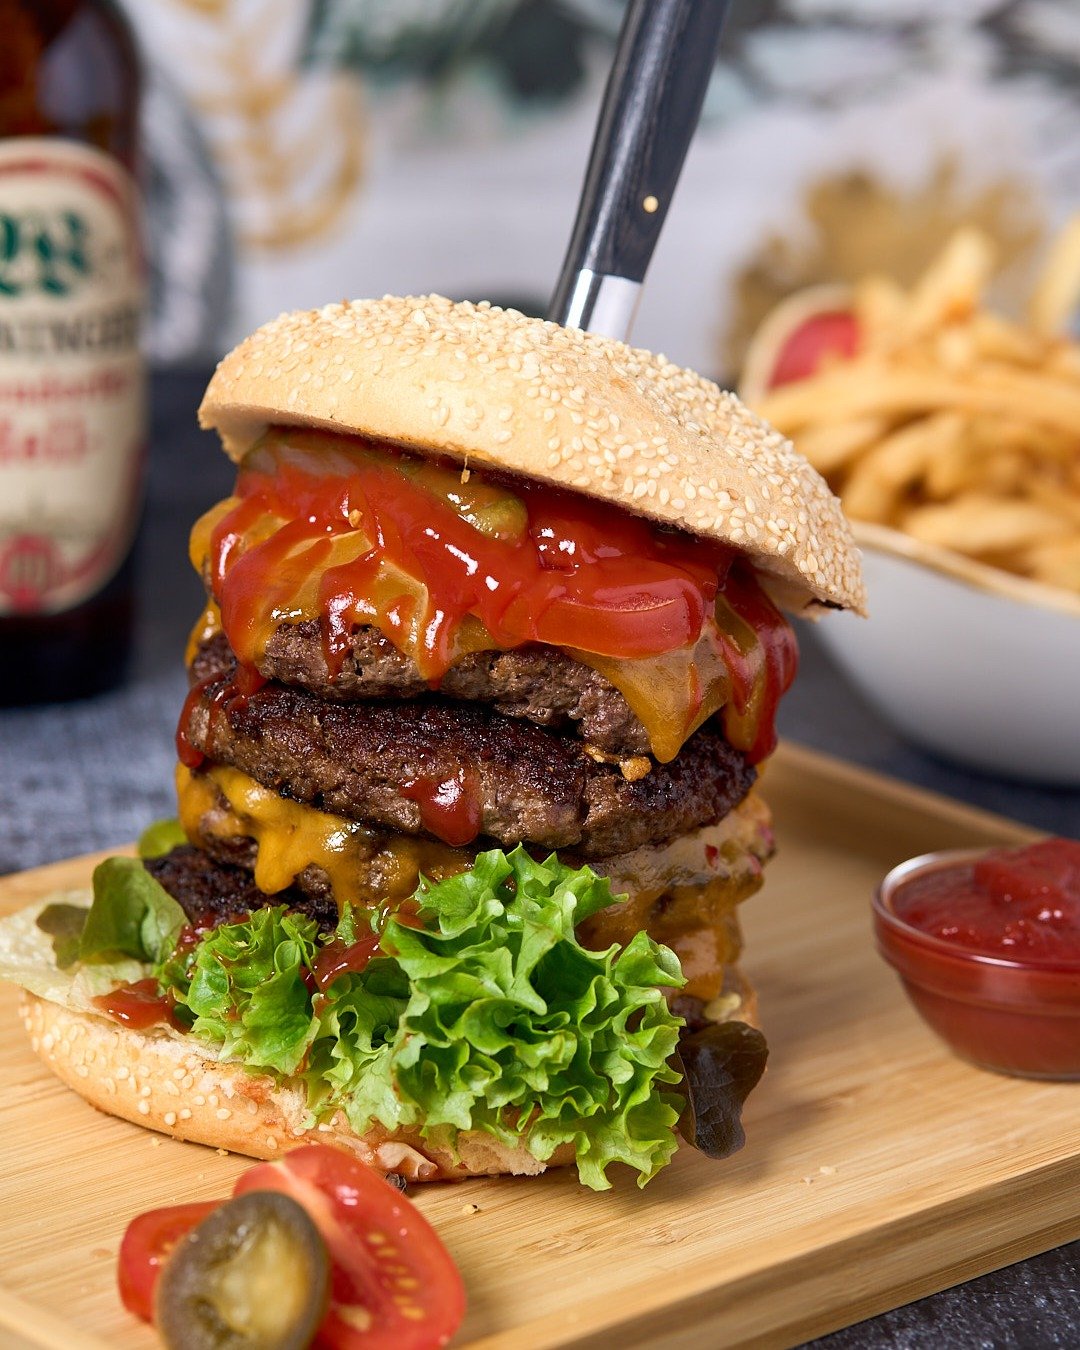 Jumbo Burger anyone? 😍

#jumboburger #daimlers #barandgrill #weloveburger